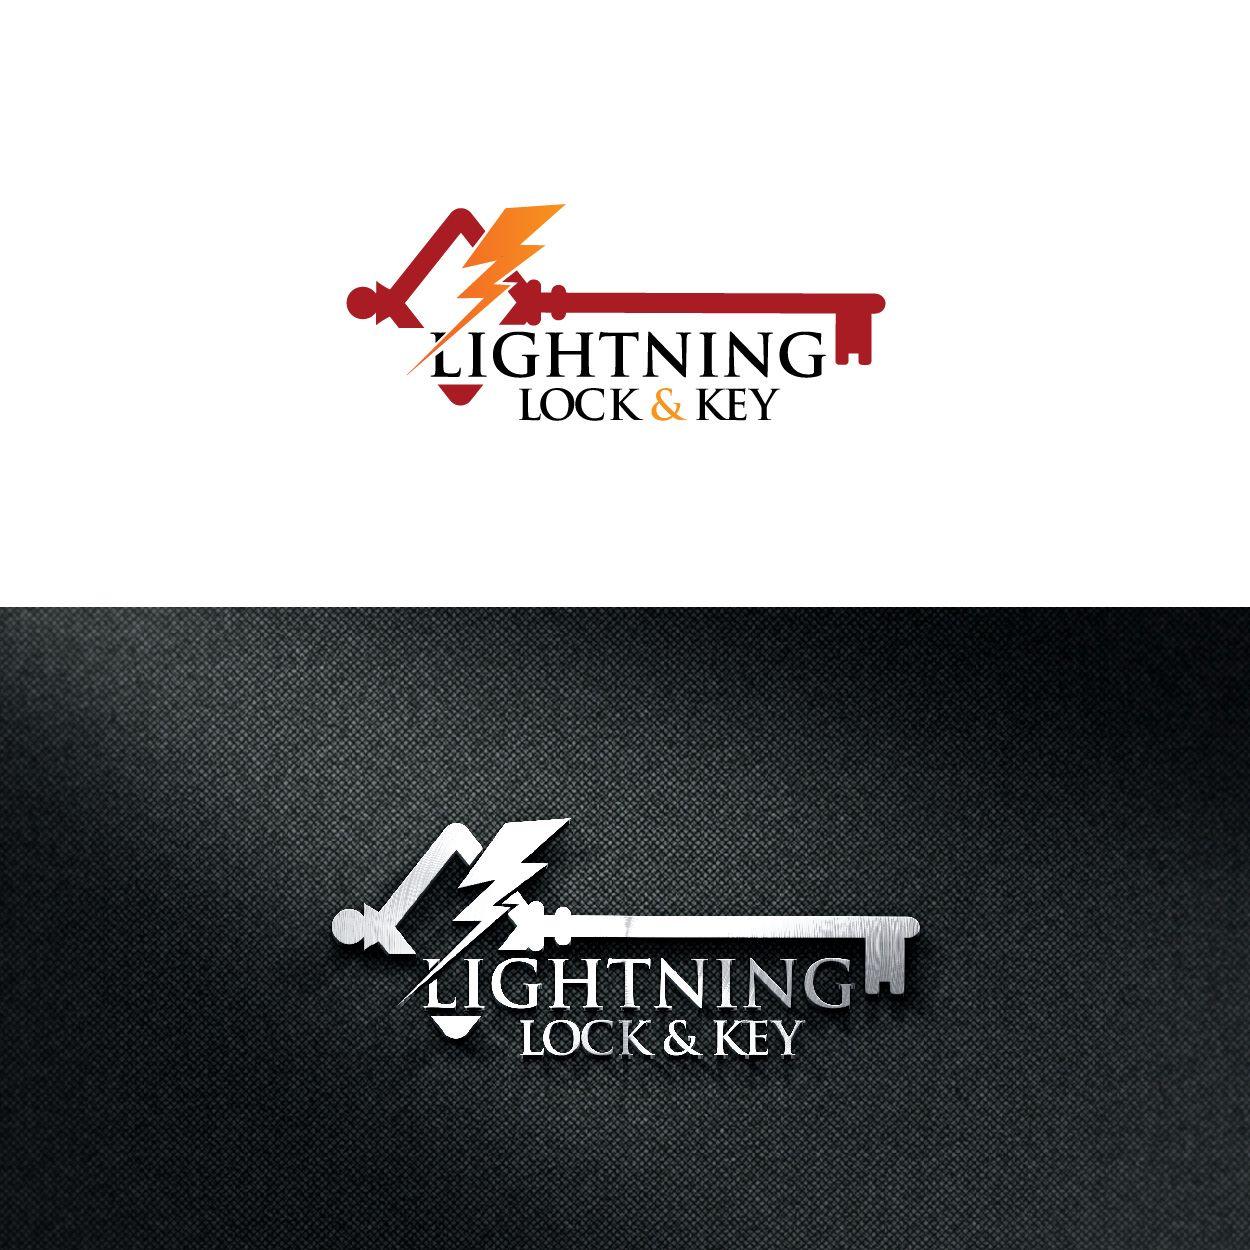 Orange Key Logo - Serious, Professional, Locksmith Logo Design for Lightning Lock ...